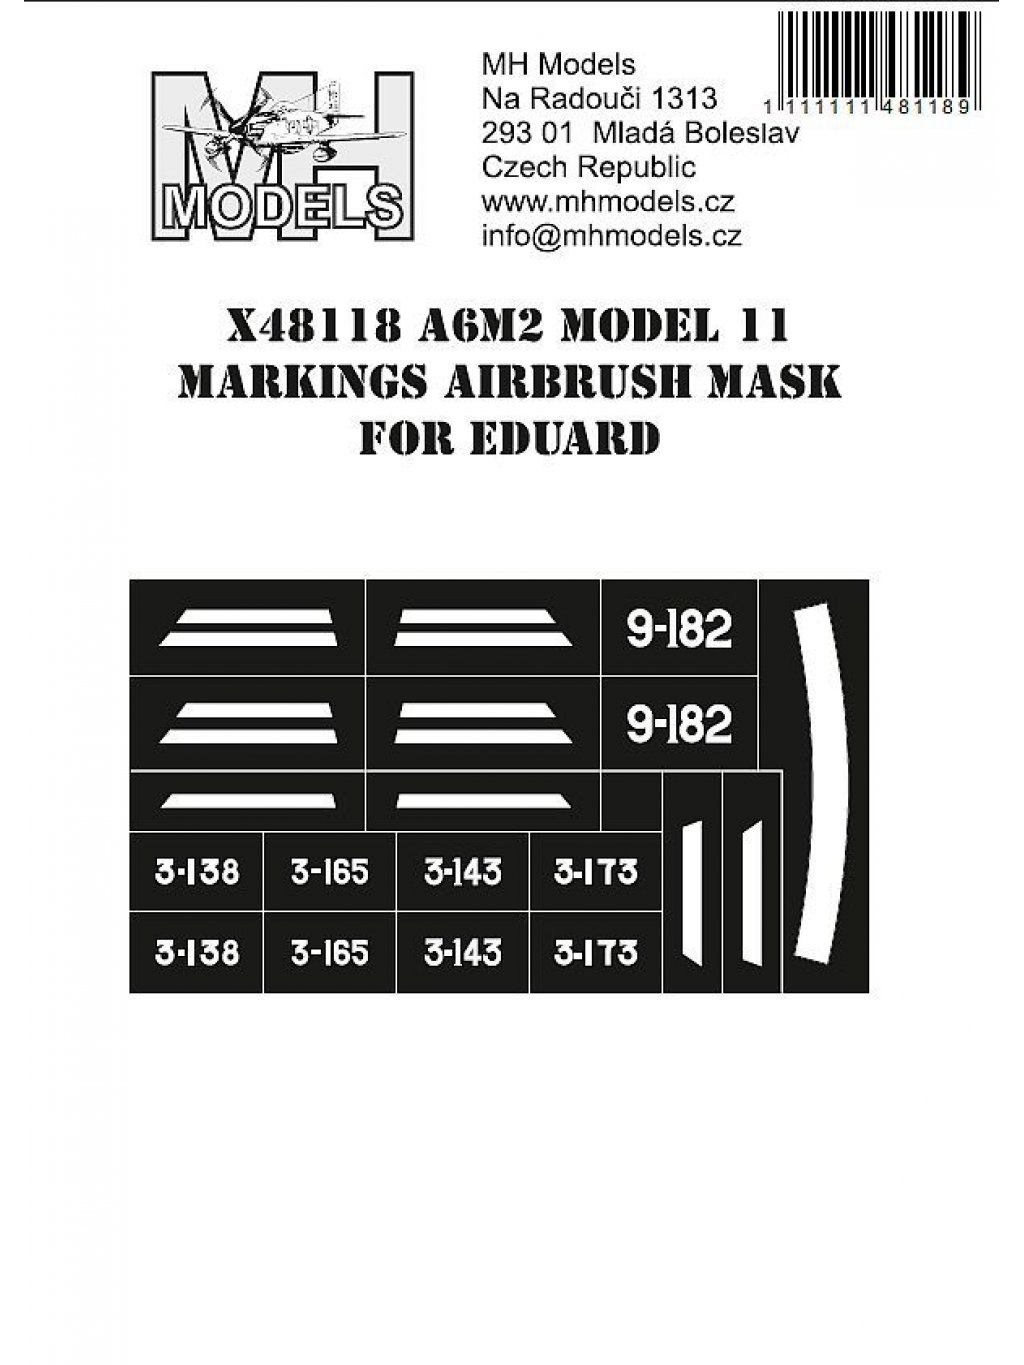 A6M2 Model 11 Markings airbrush mask for Eduard